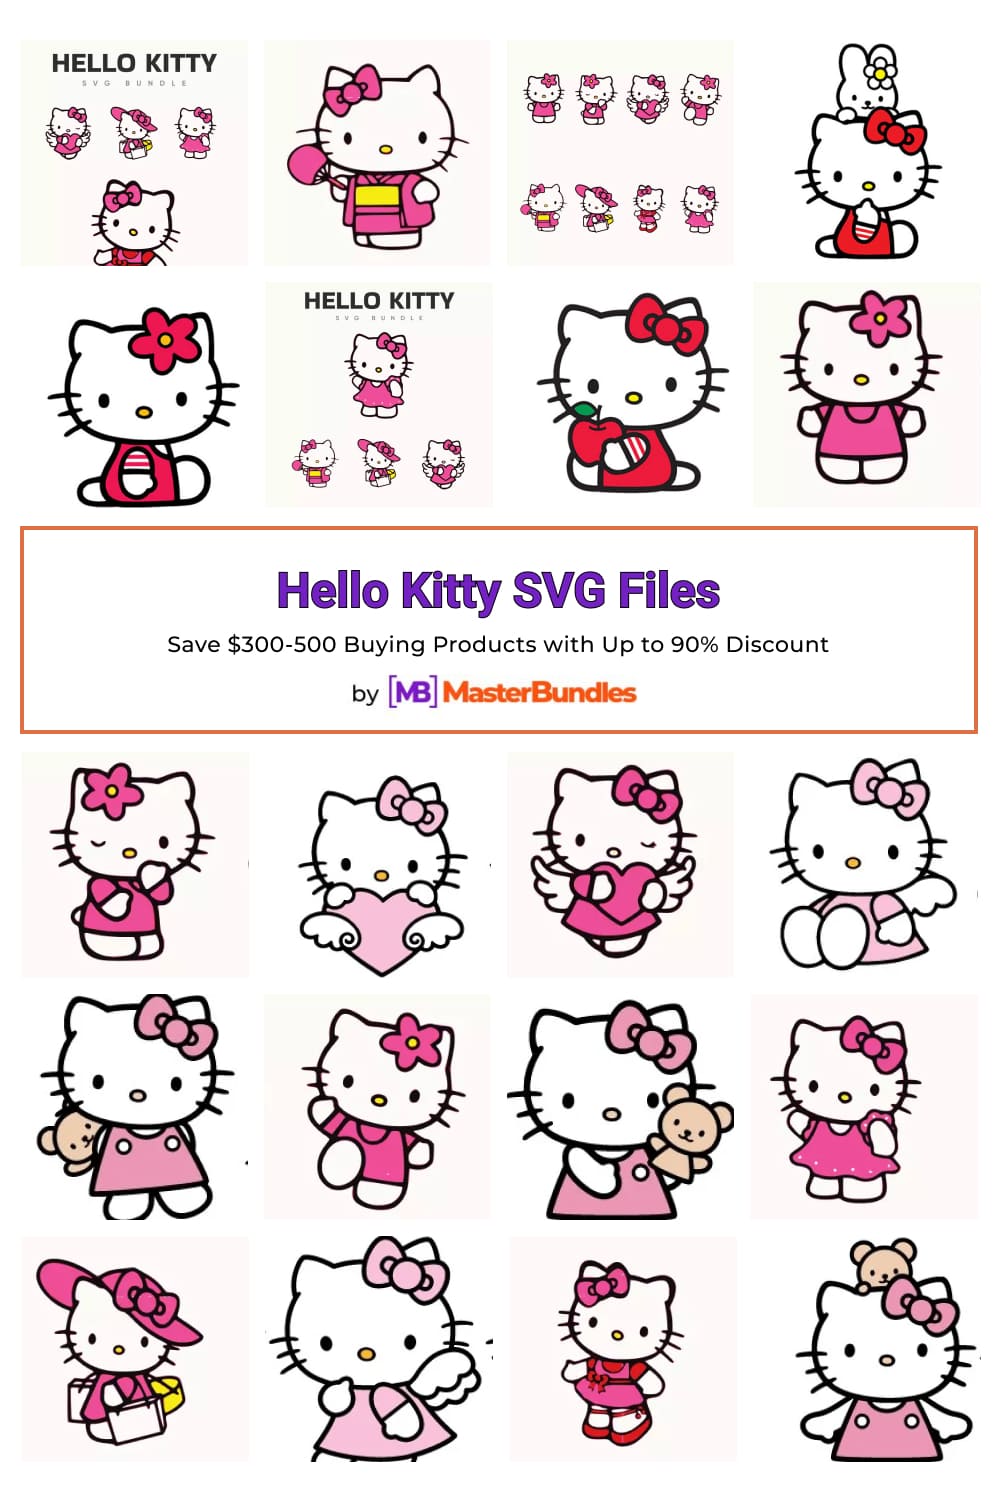 Hello Kitty SVG Files for pinterest.